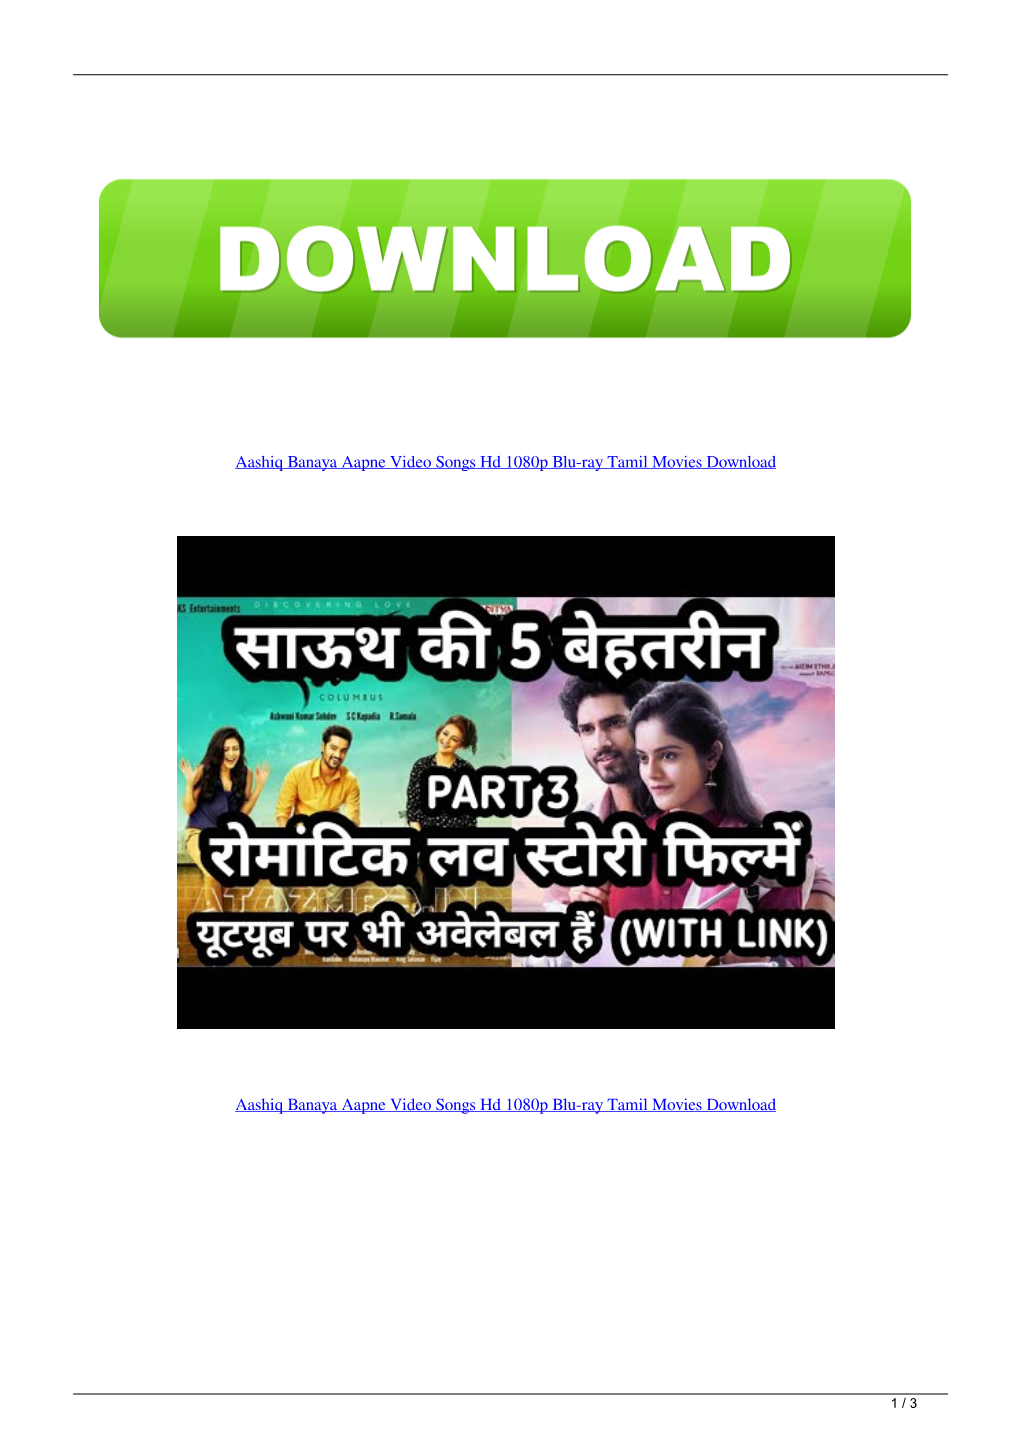 Aashiq Banaya Aapne Video Songs Hd 1080P Blu-Ray Tamil Movies Download